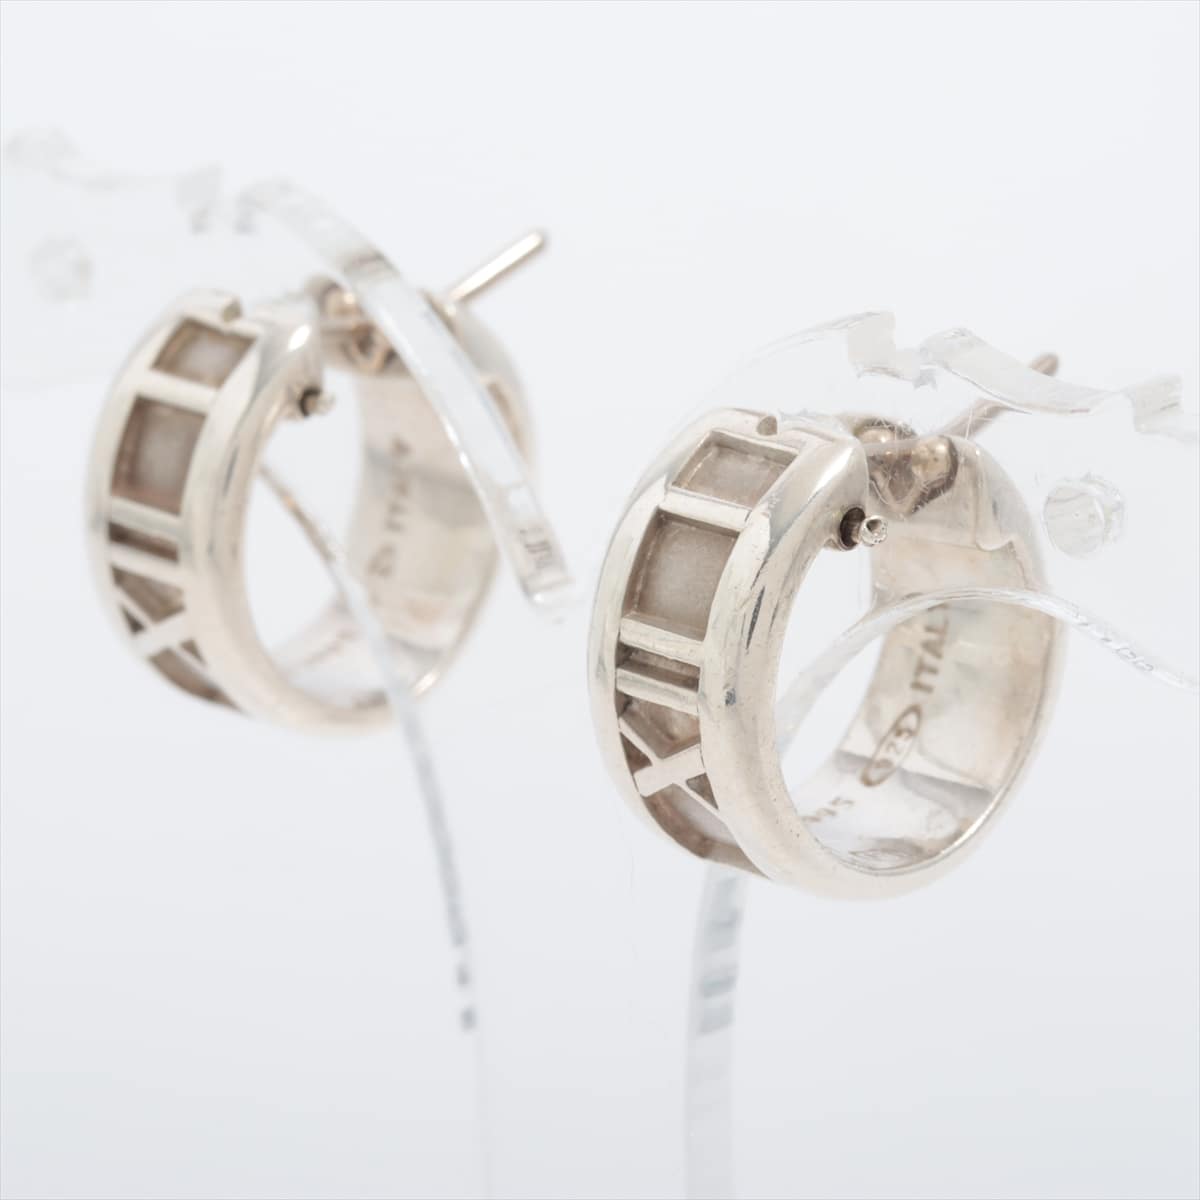 Tiffany Atlas Piercing jewelry (for both ears) 925 6.7g Silver